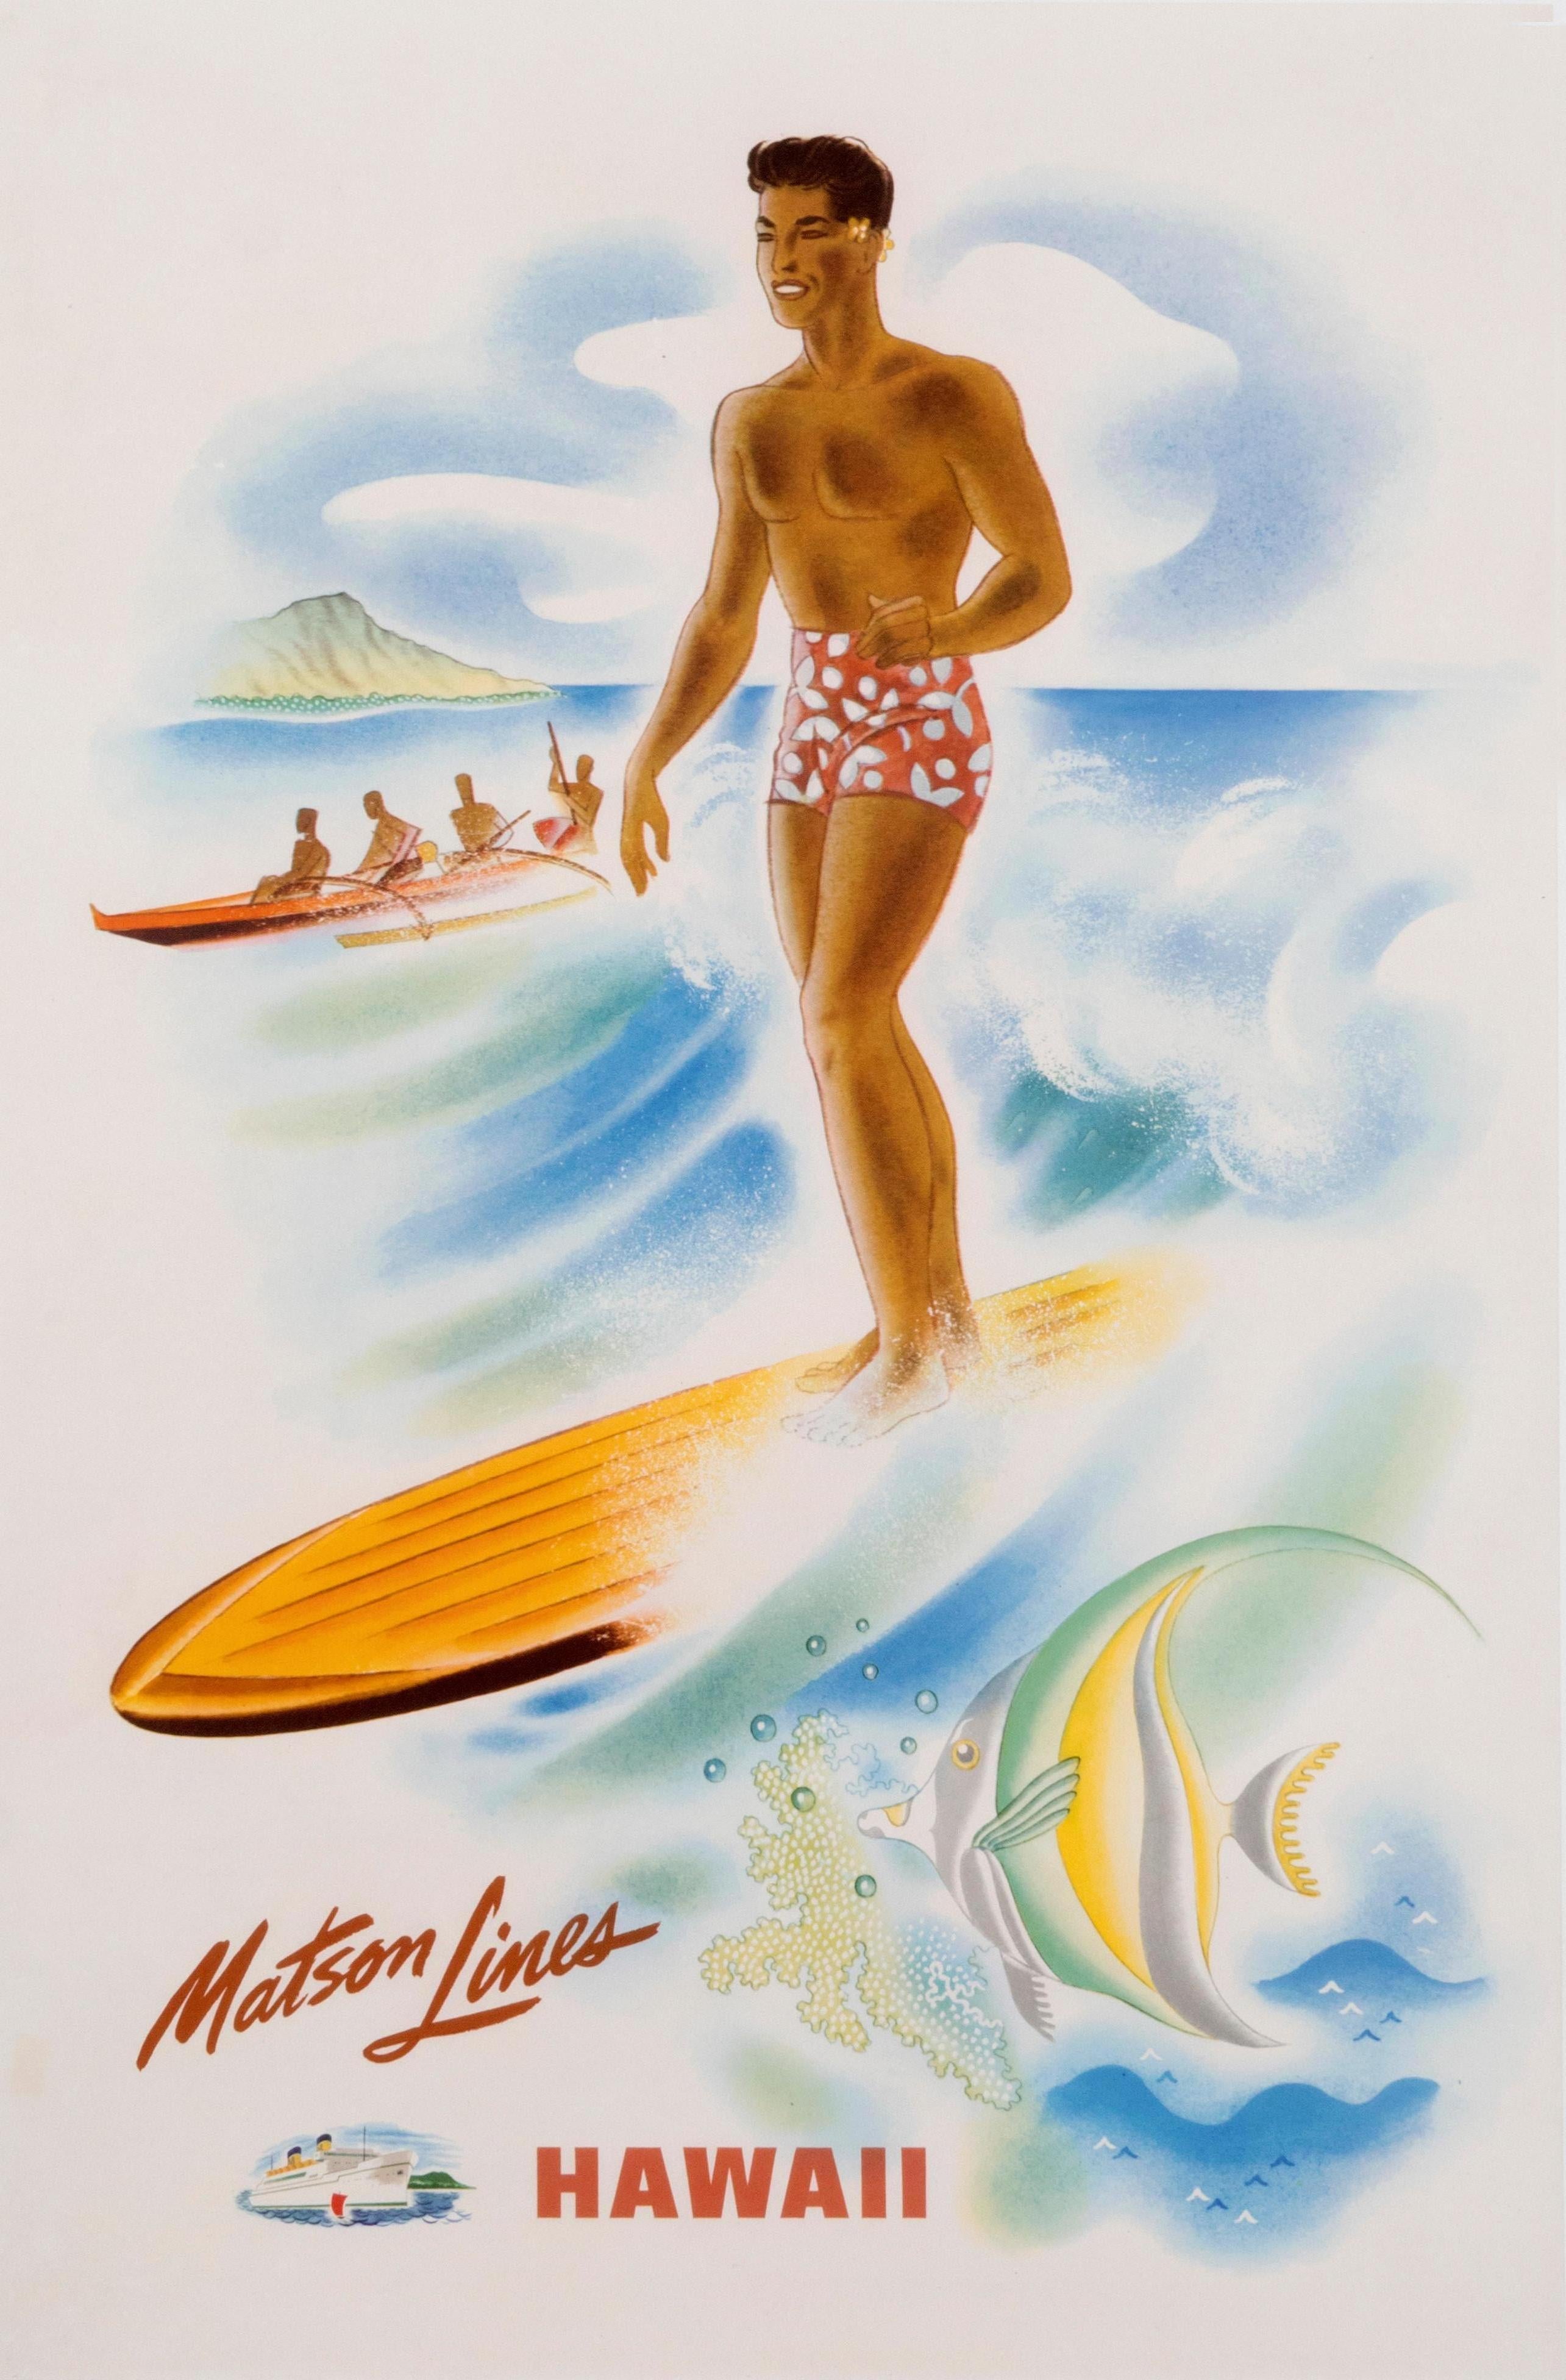 "Matson Lines to  Hawaii" Original Vintage surfer poster  - Print by Frank McIntosh